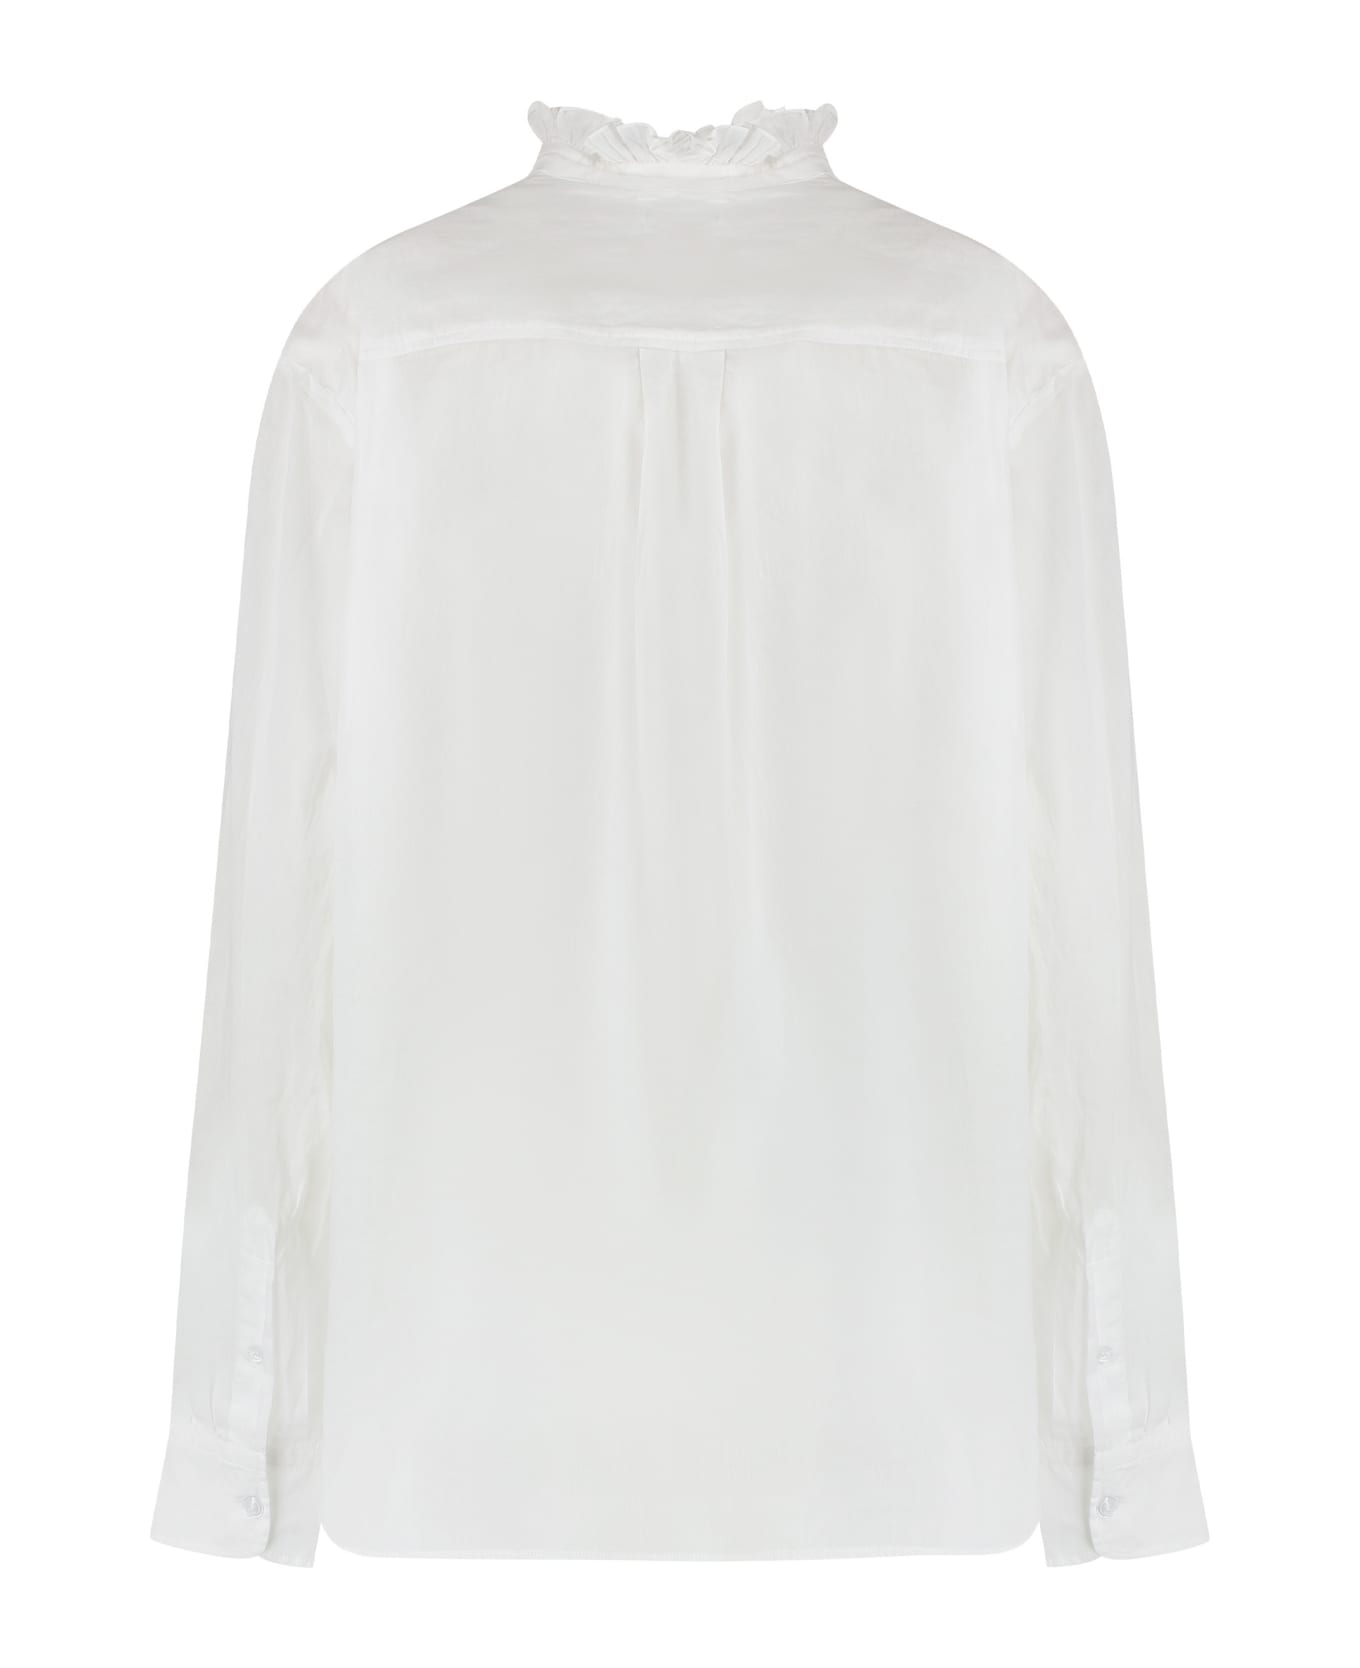 Marant Étoile Gamble Cotton Shirt - White シャツ